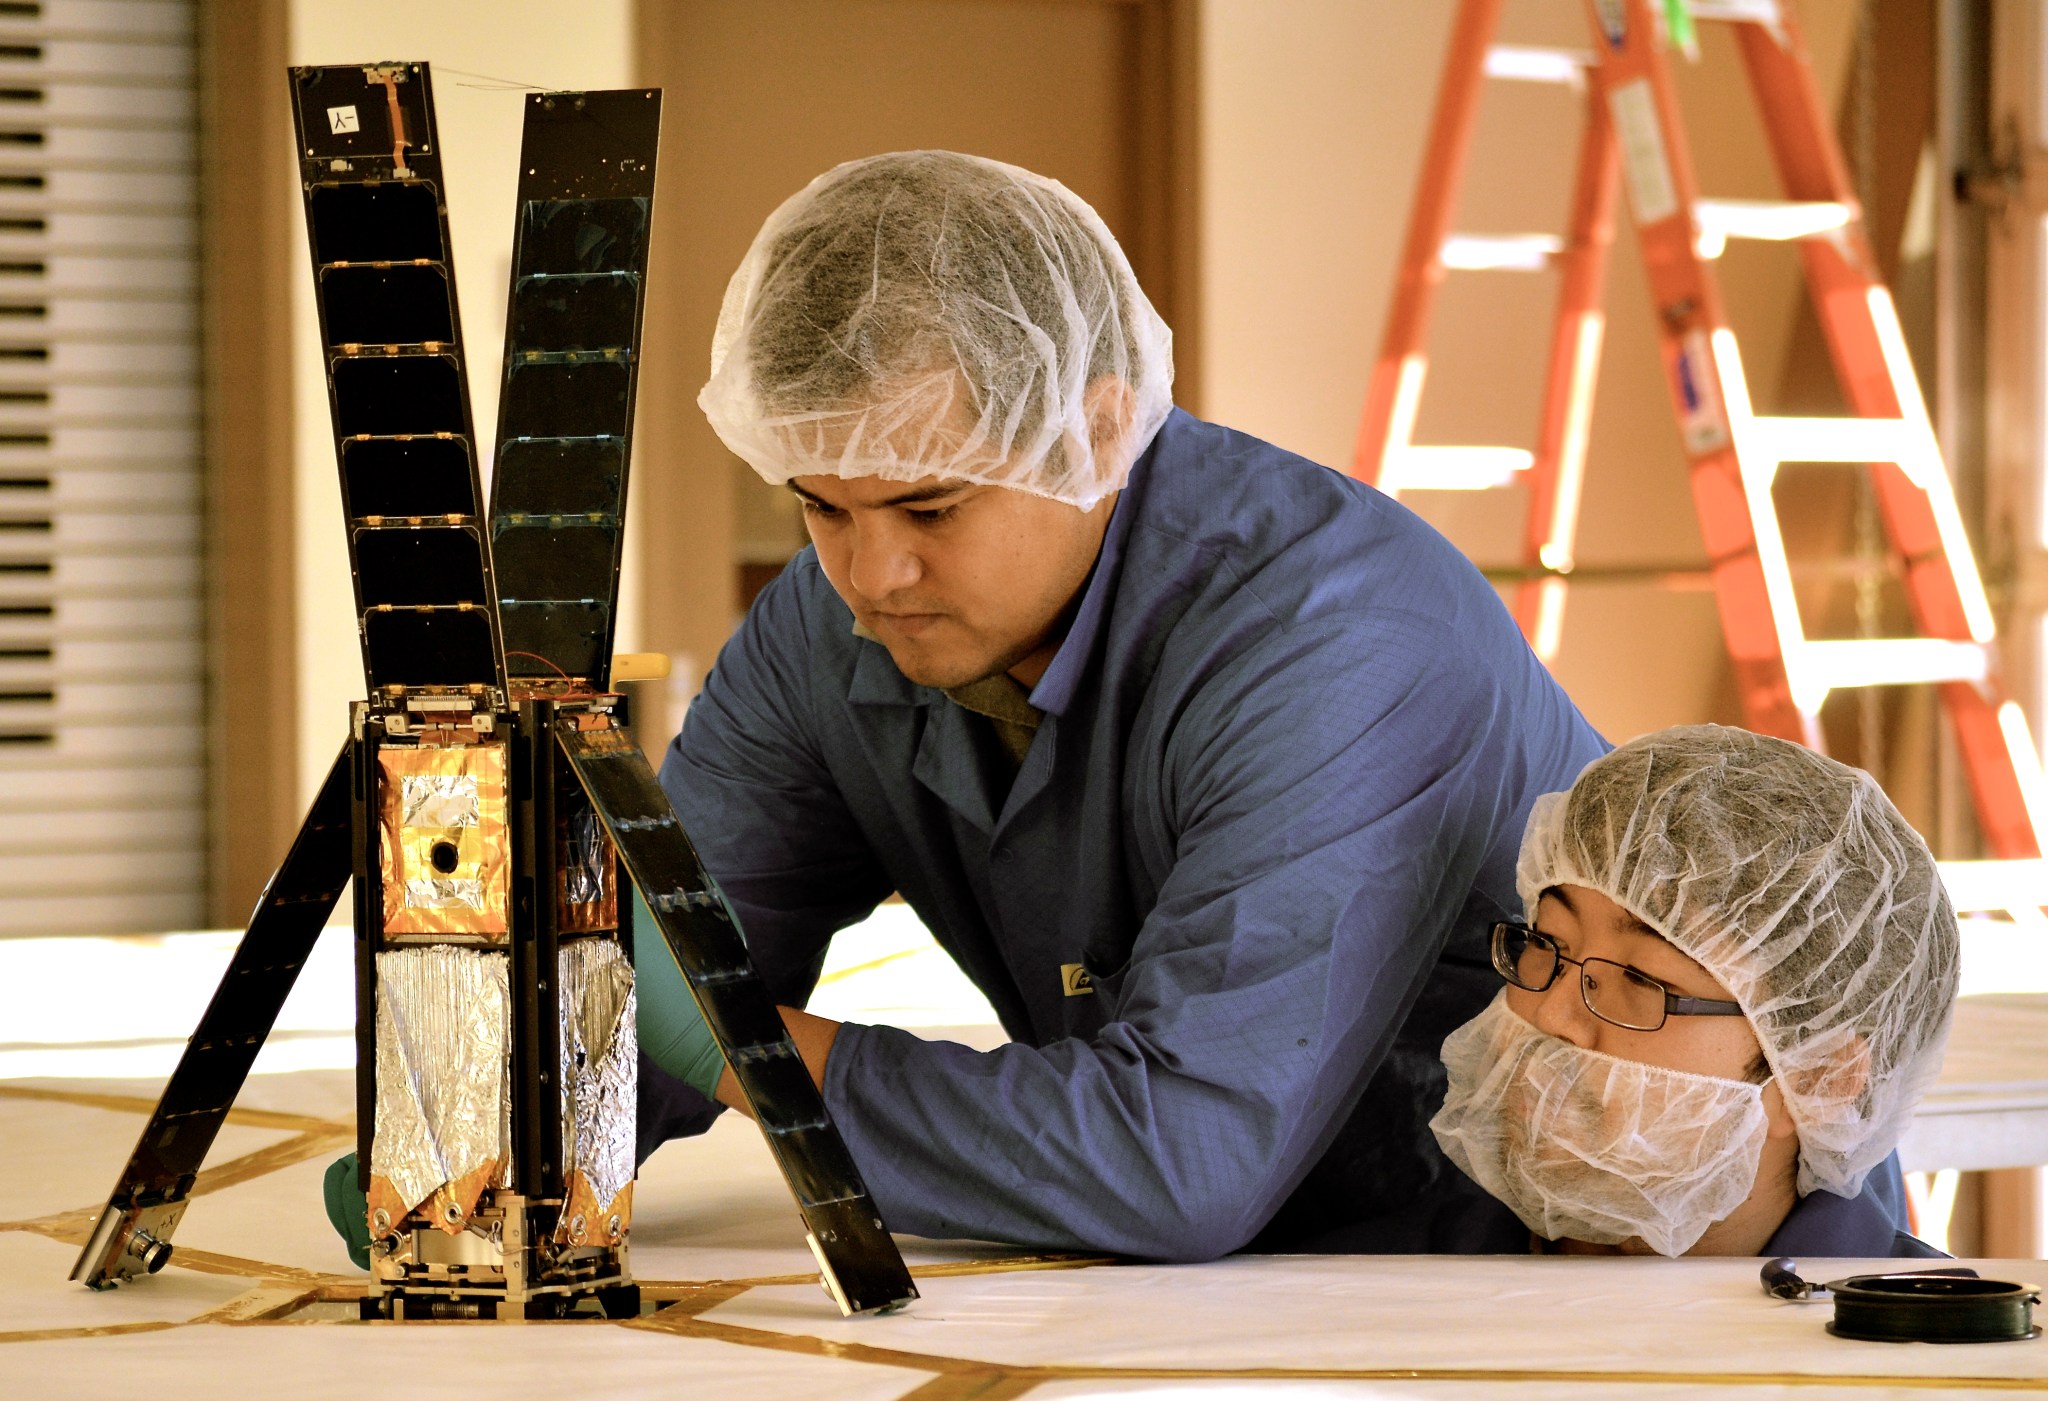 LightSail team members Alex Diaz and Riki Munakata prepare the spacecraft for a sail deployment test. 